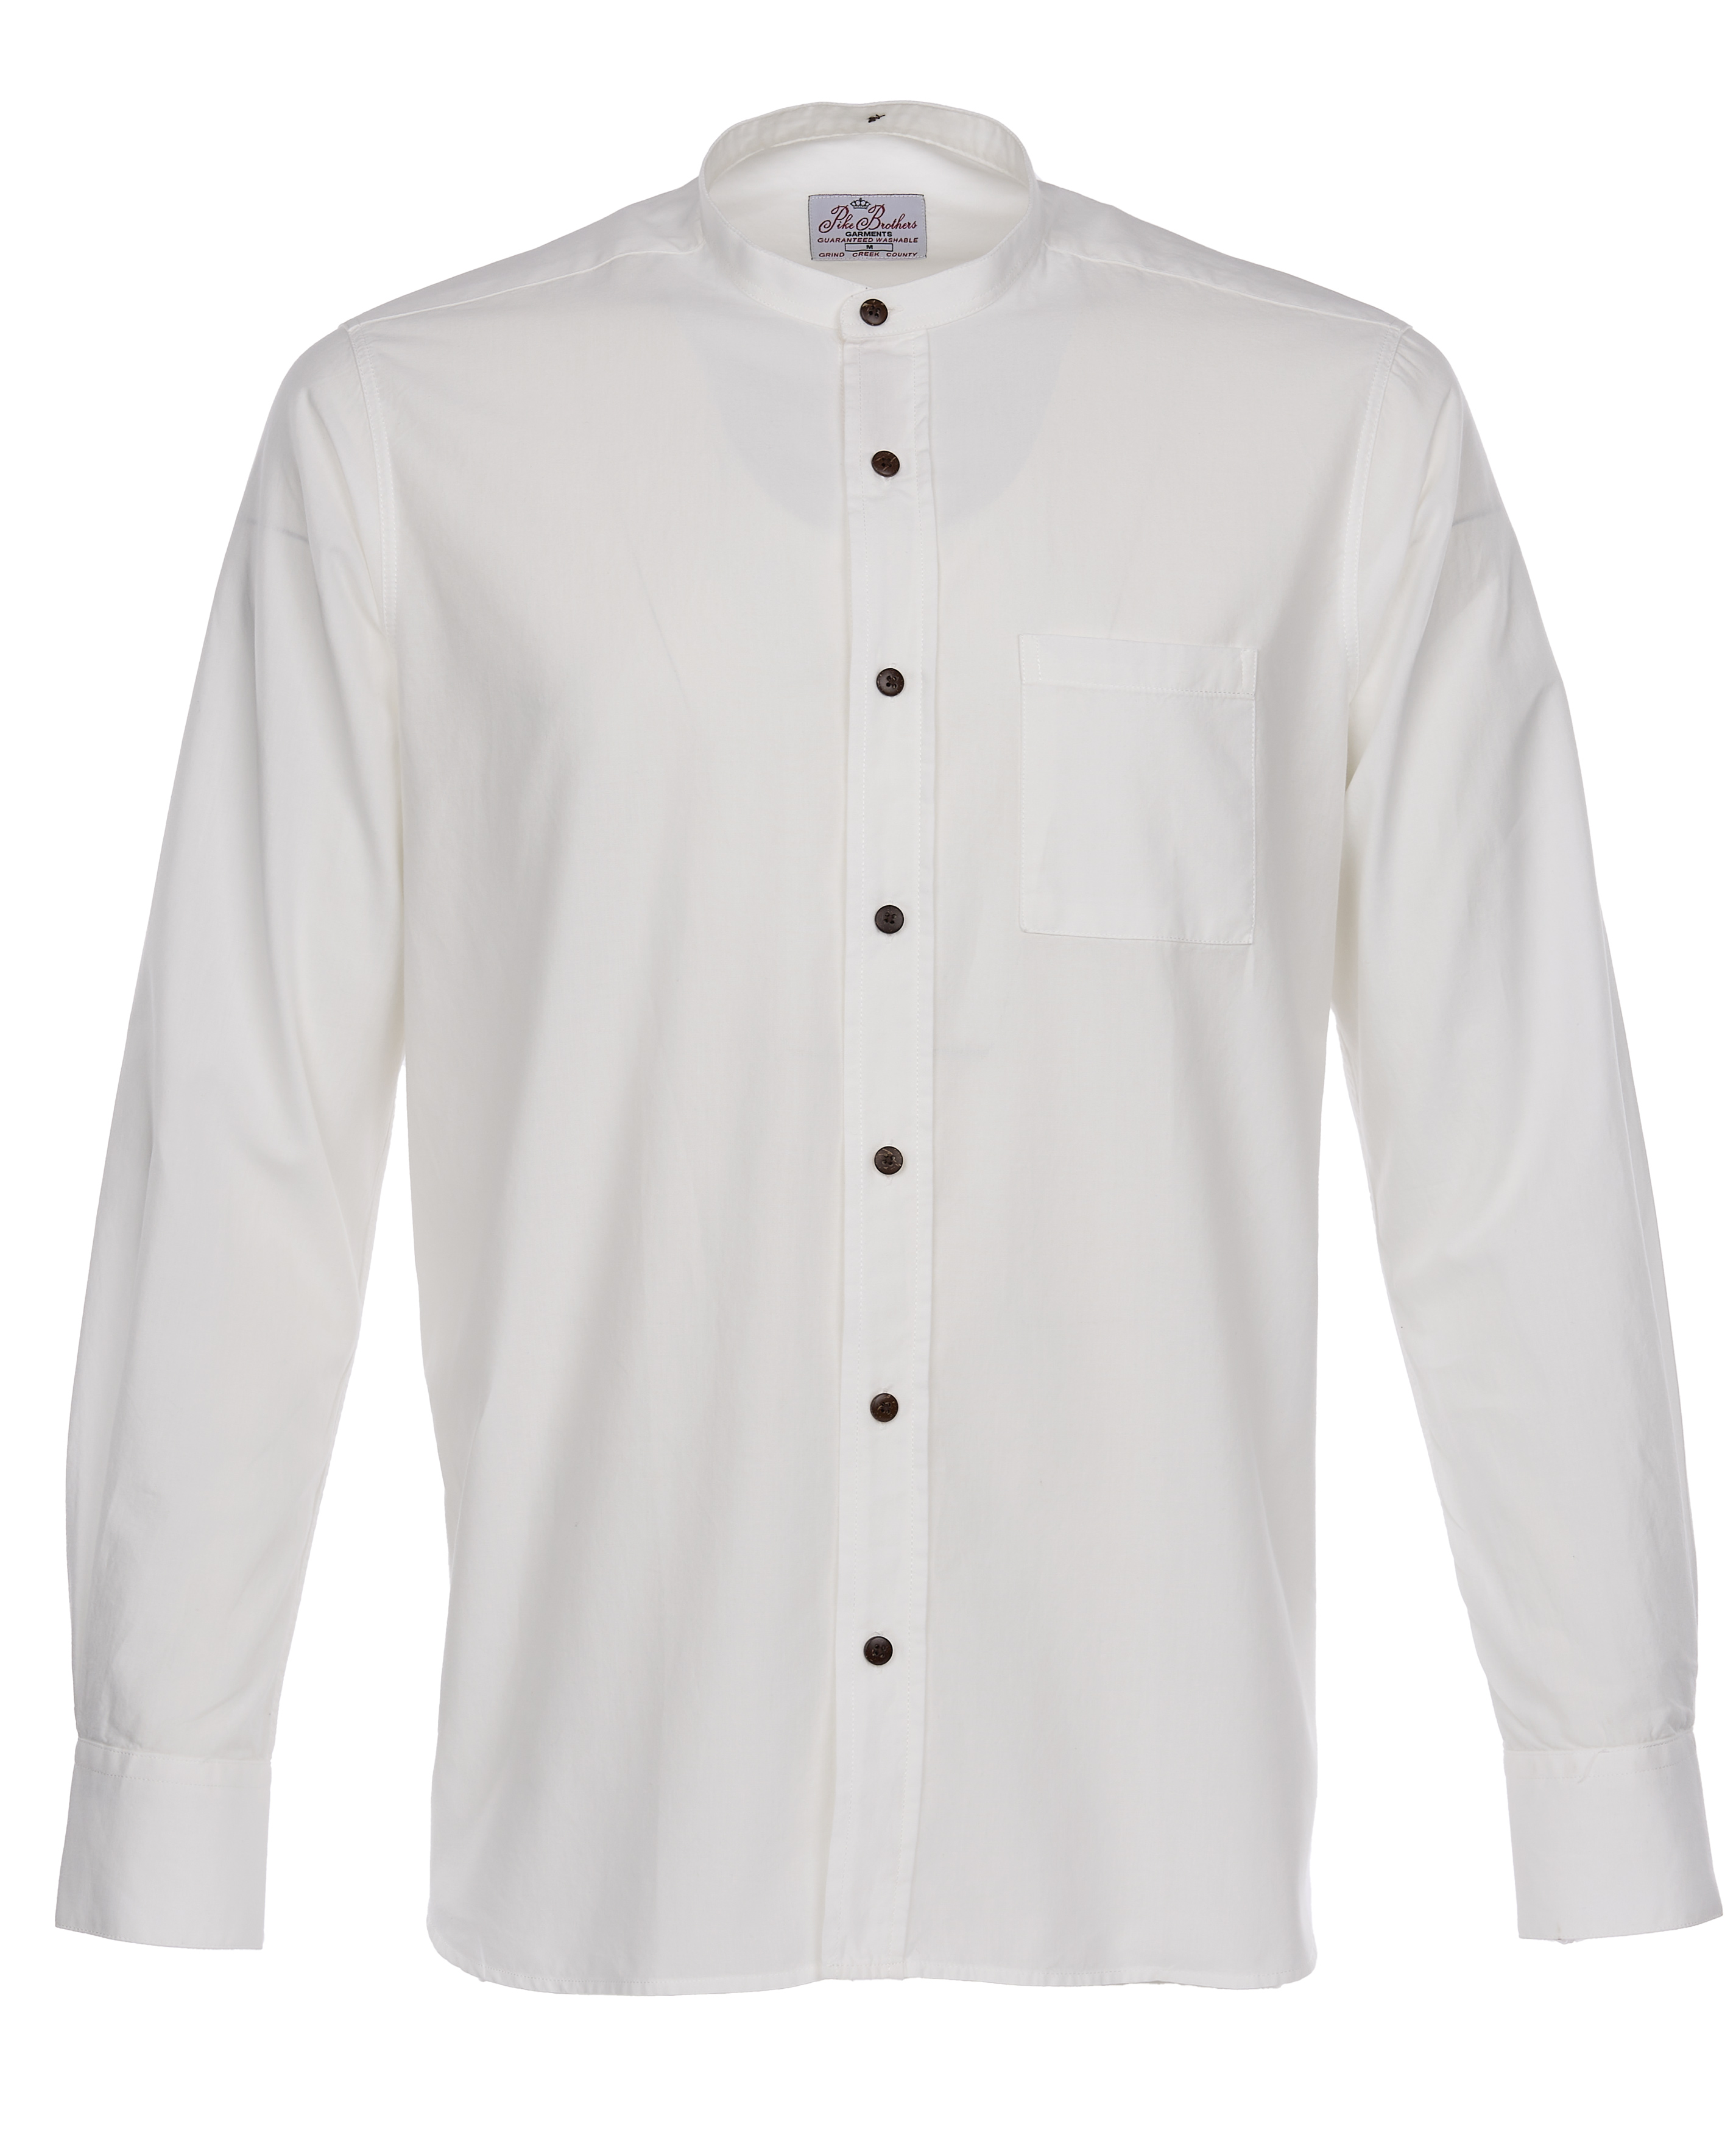 1923 Buccanoy Shirt white chambray